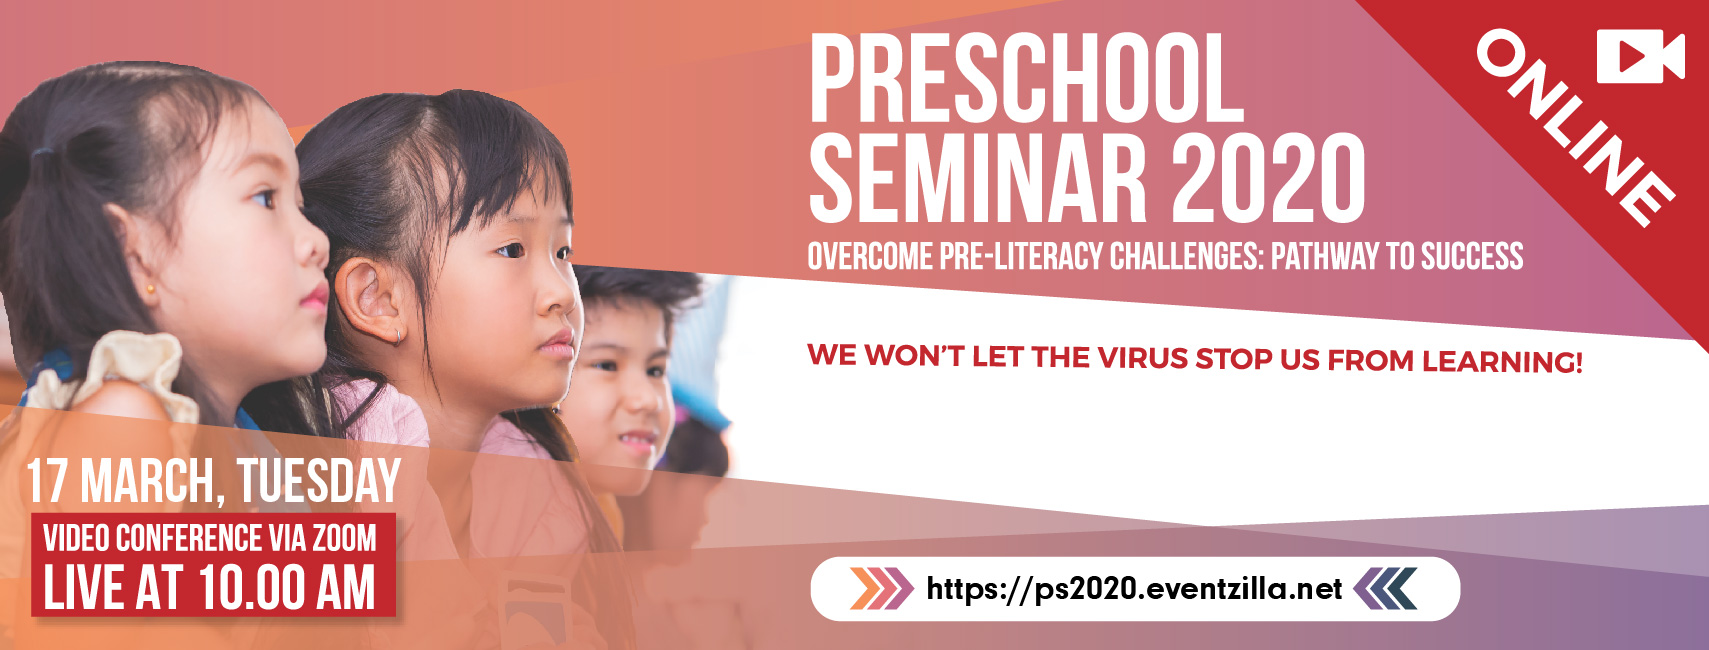 DAS Preschool Seminar 2020, Online LIVE streaming conference via ZOOM, Singapore